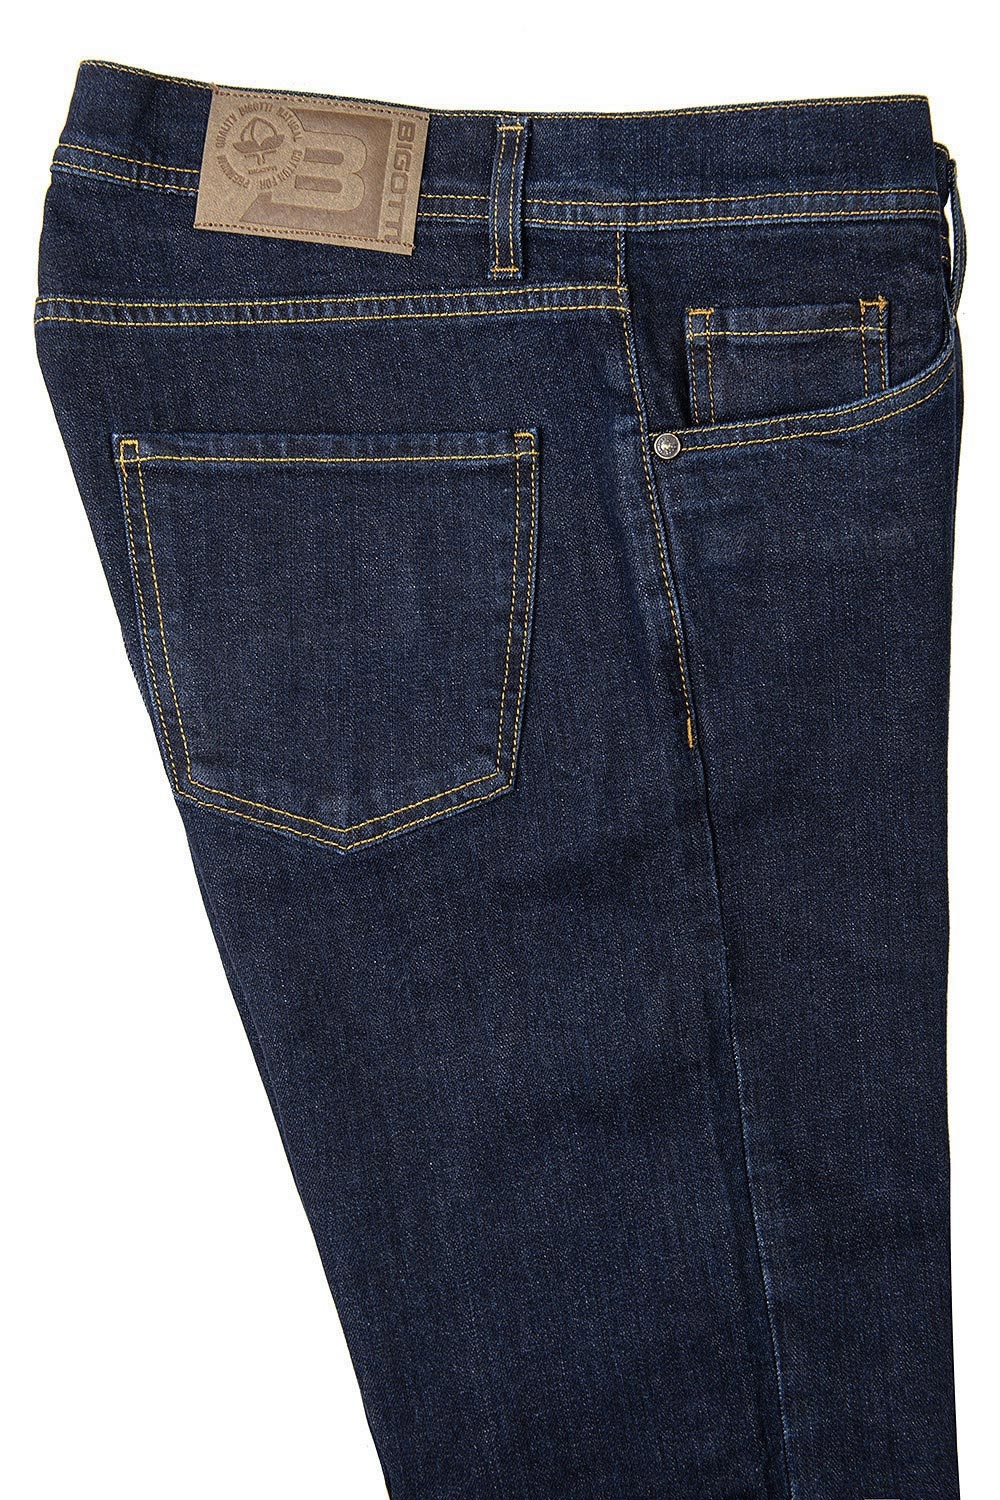 Navy jeans 2